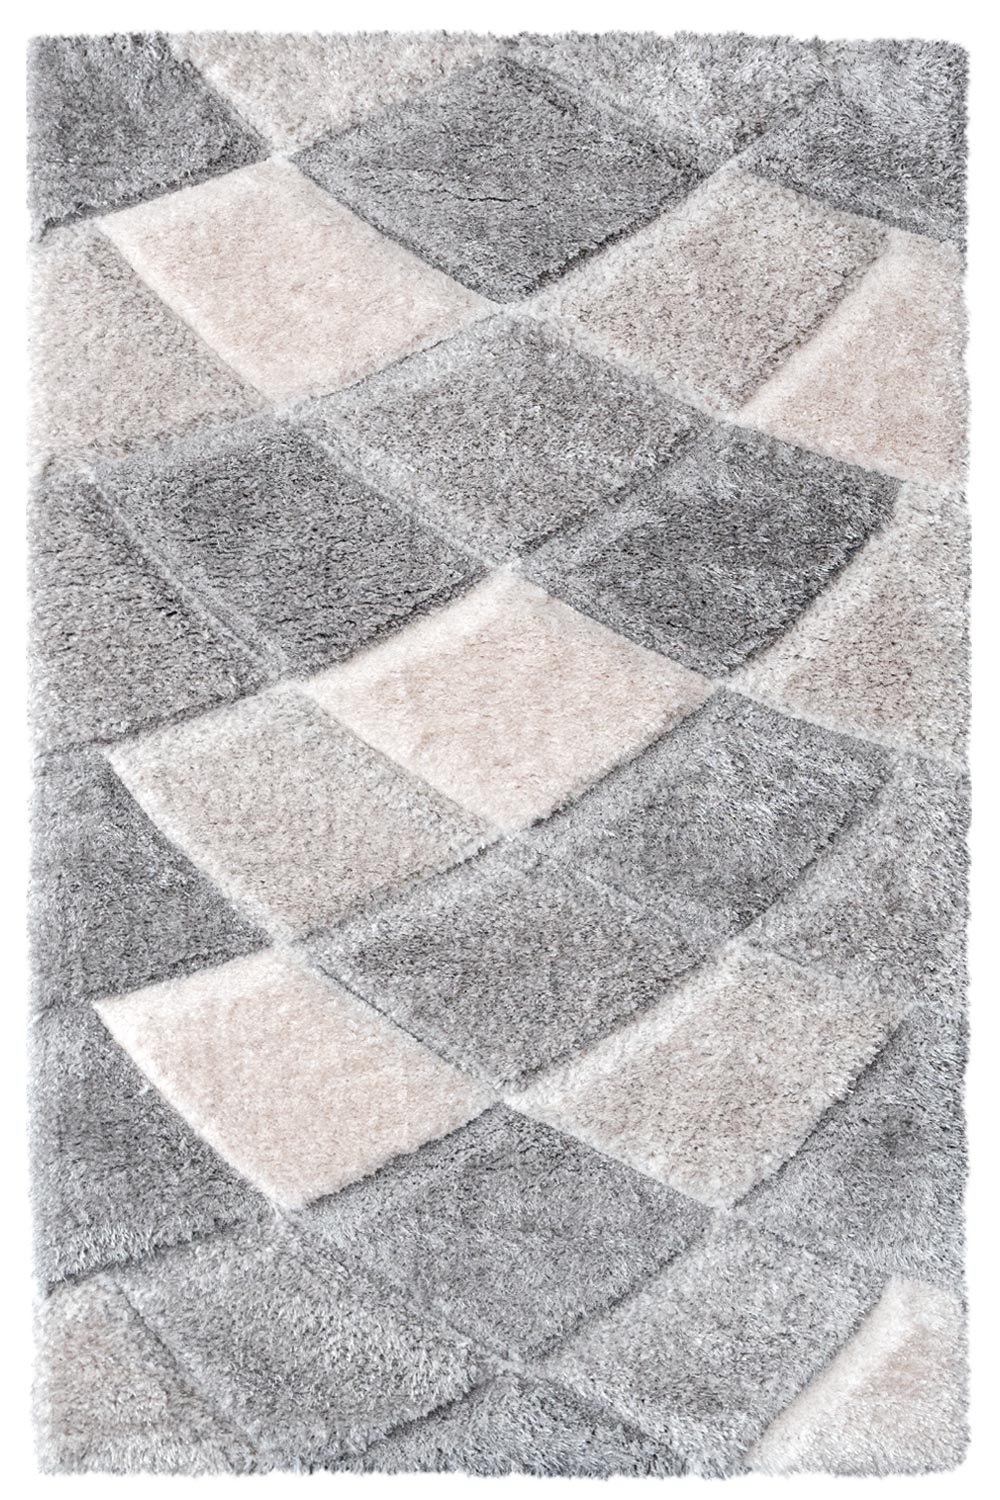 Kusový koberec CALIFORNIA P428B grey/beige 120x180 cm